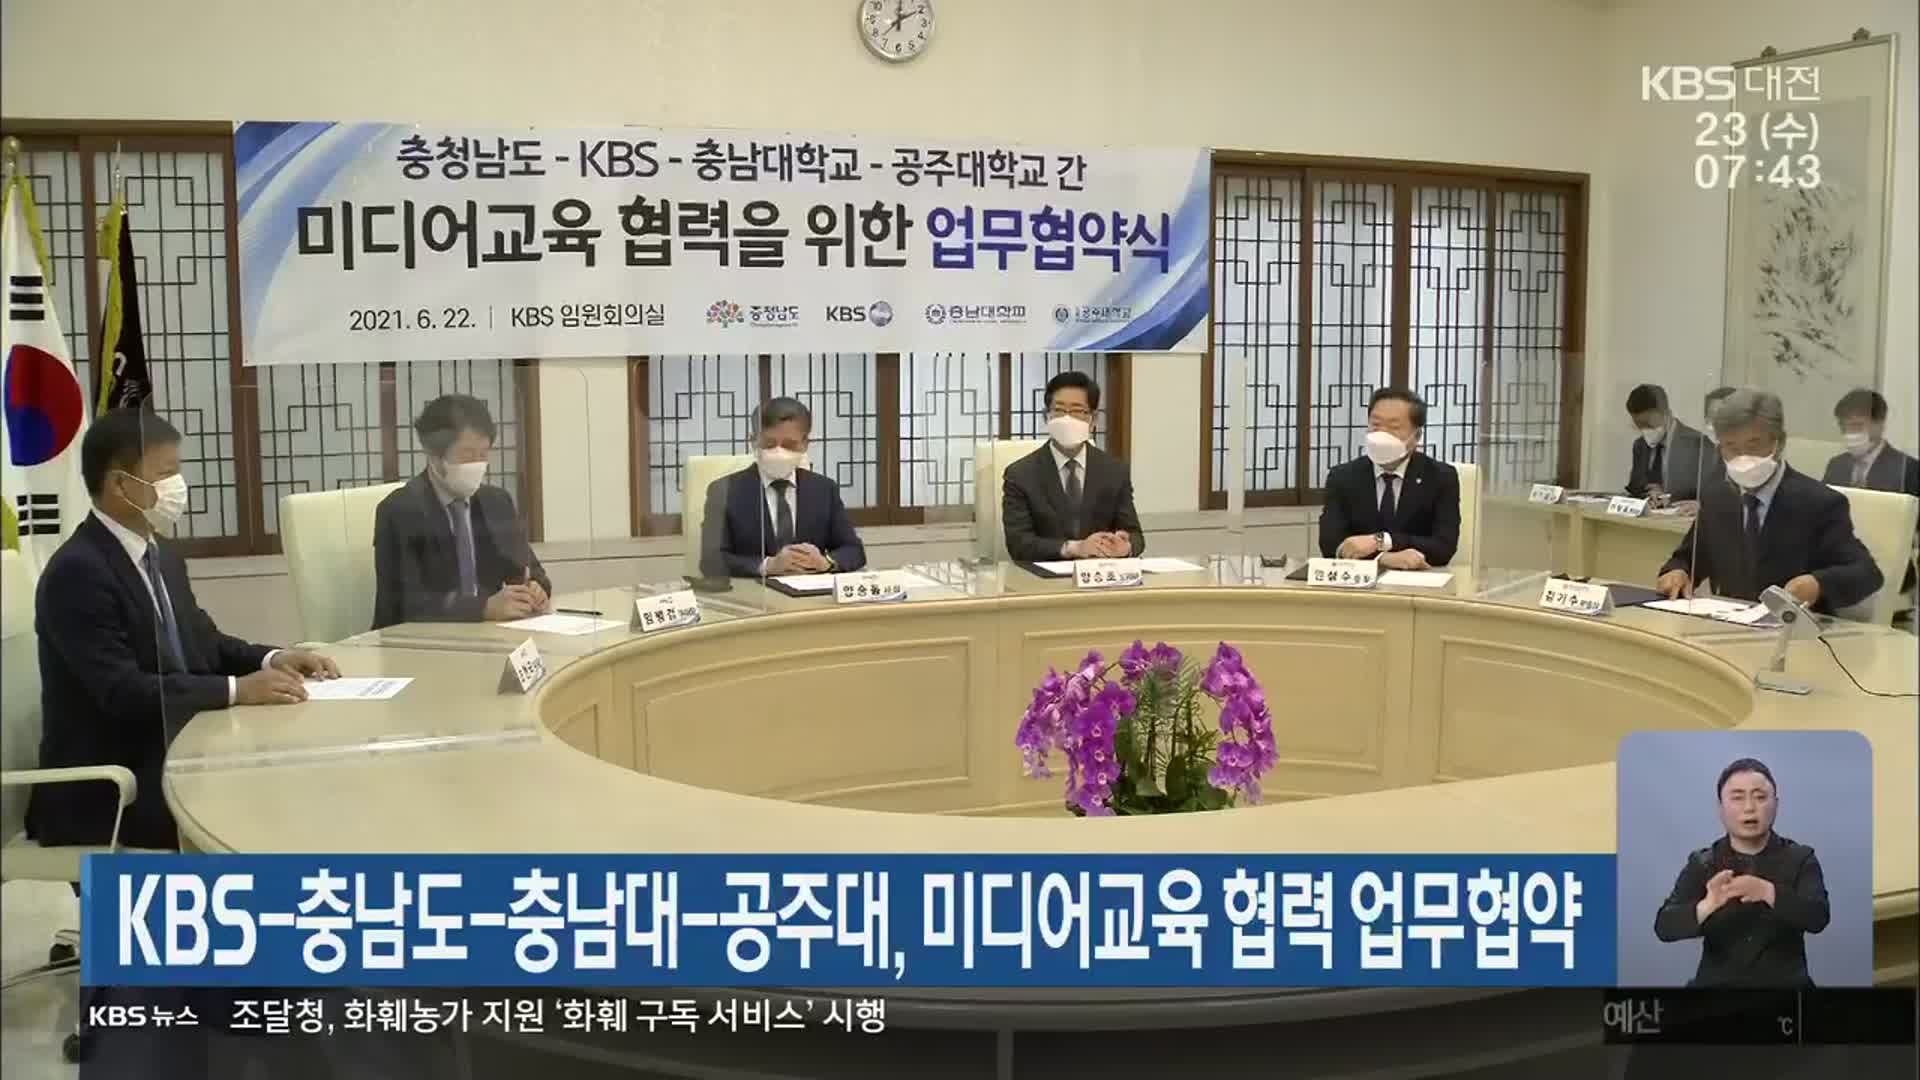 KBS-충남도-충남대-공주대, 미디어교육 협력 업무협약